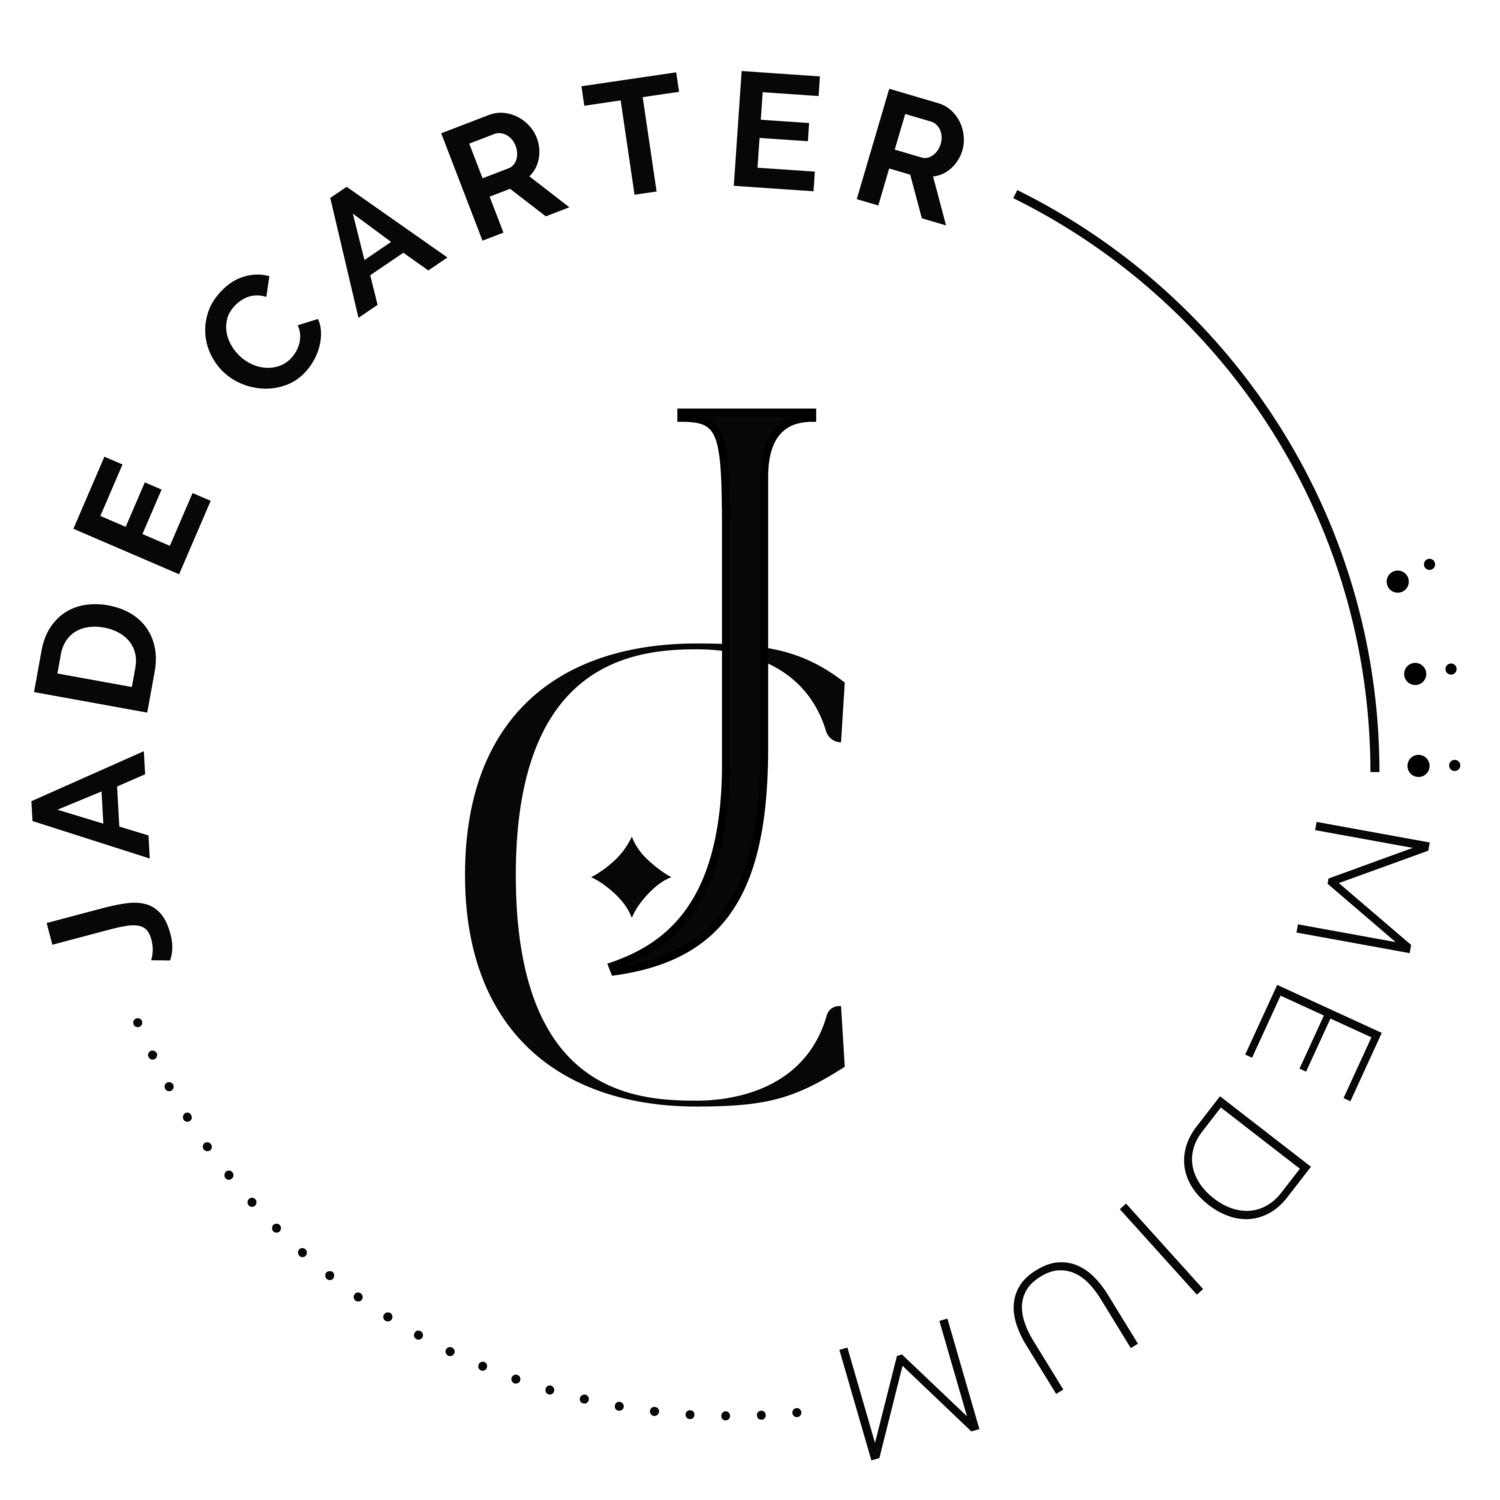 Jade Carter